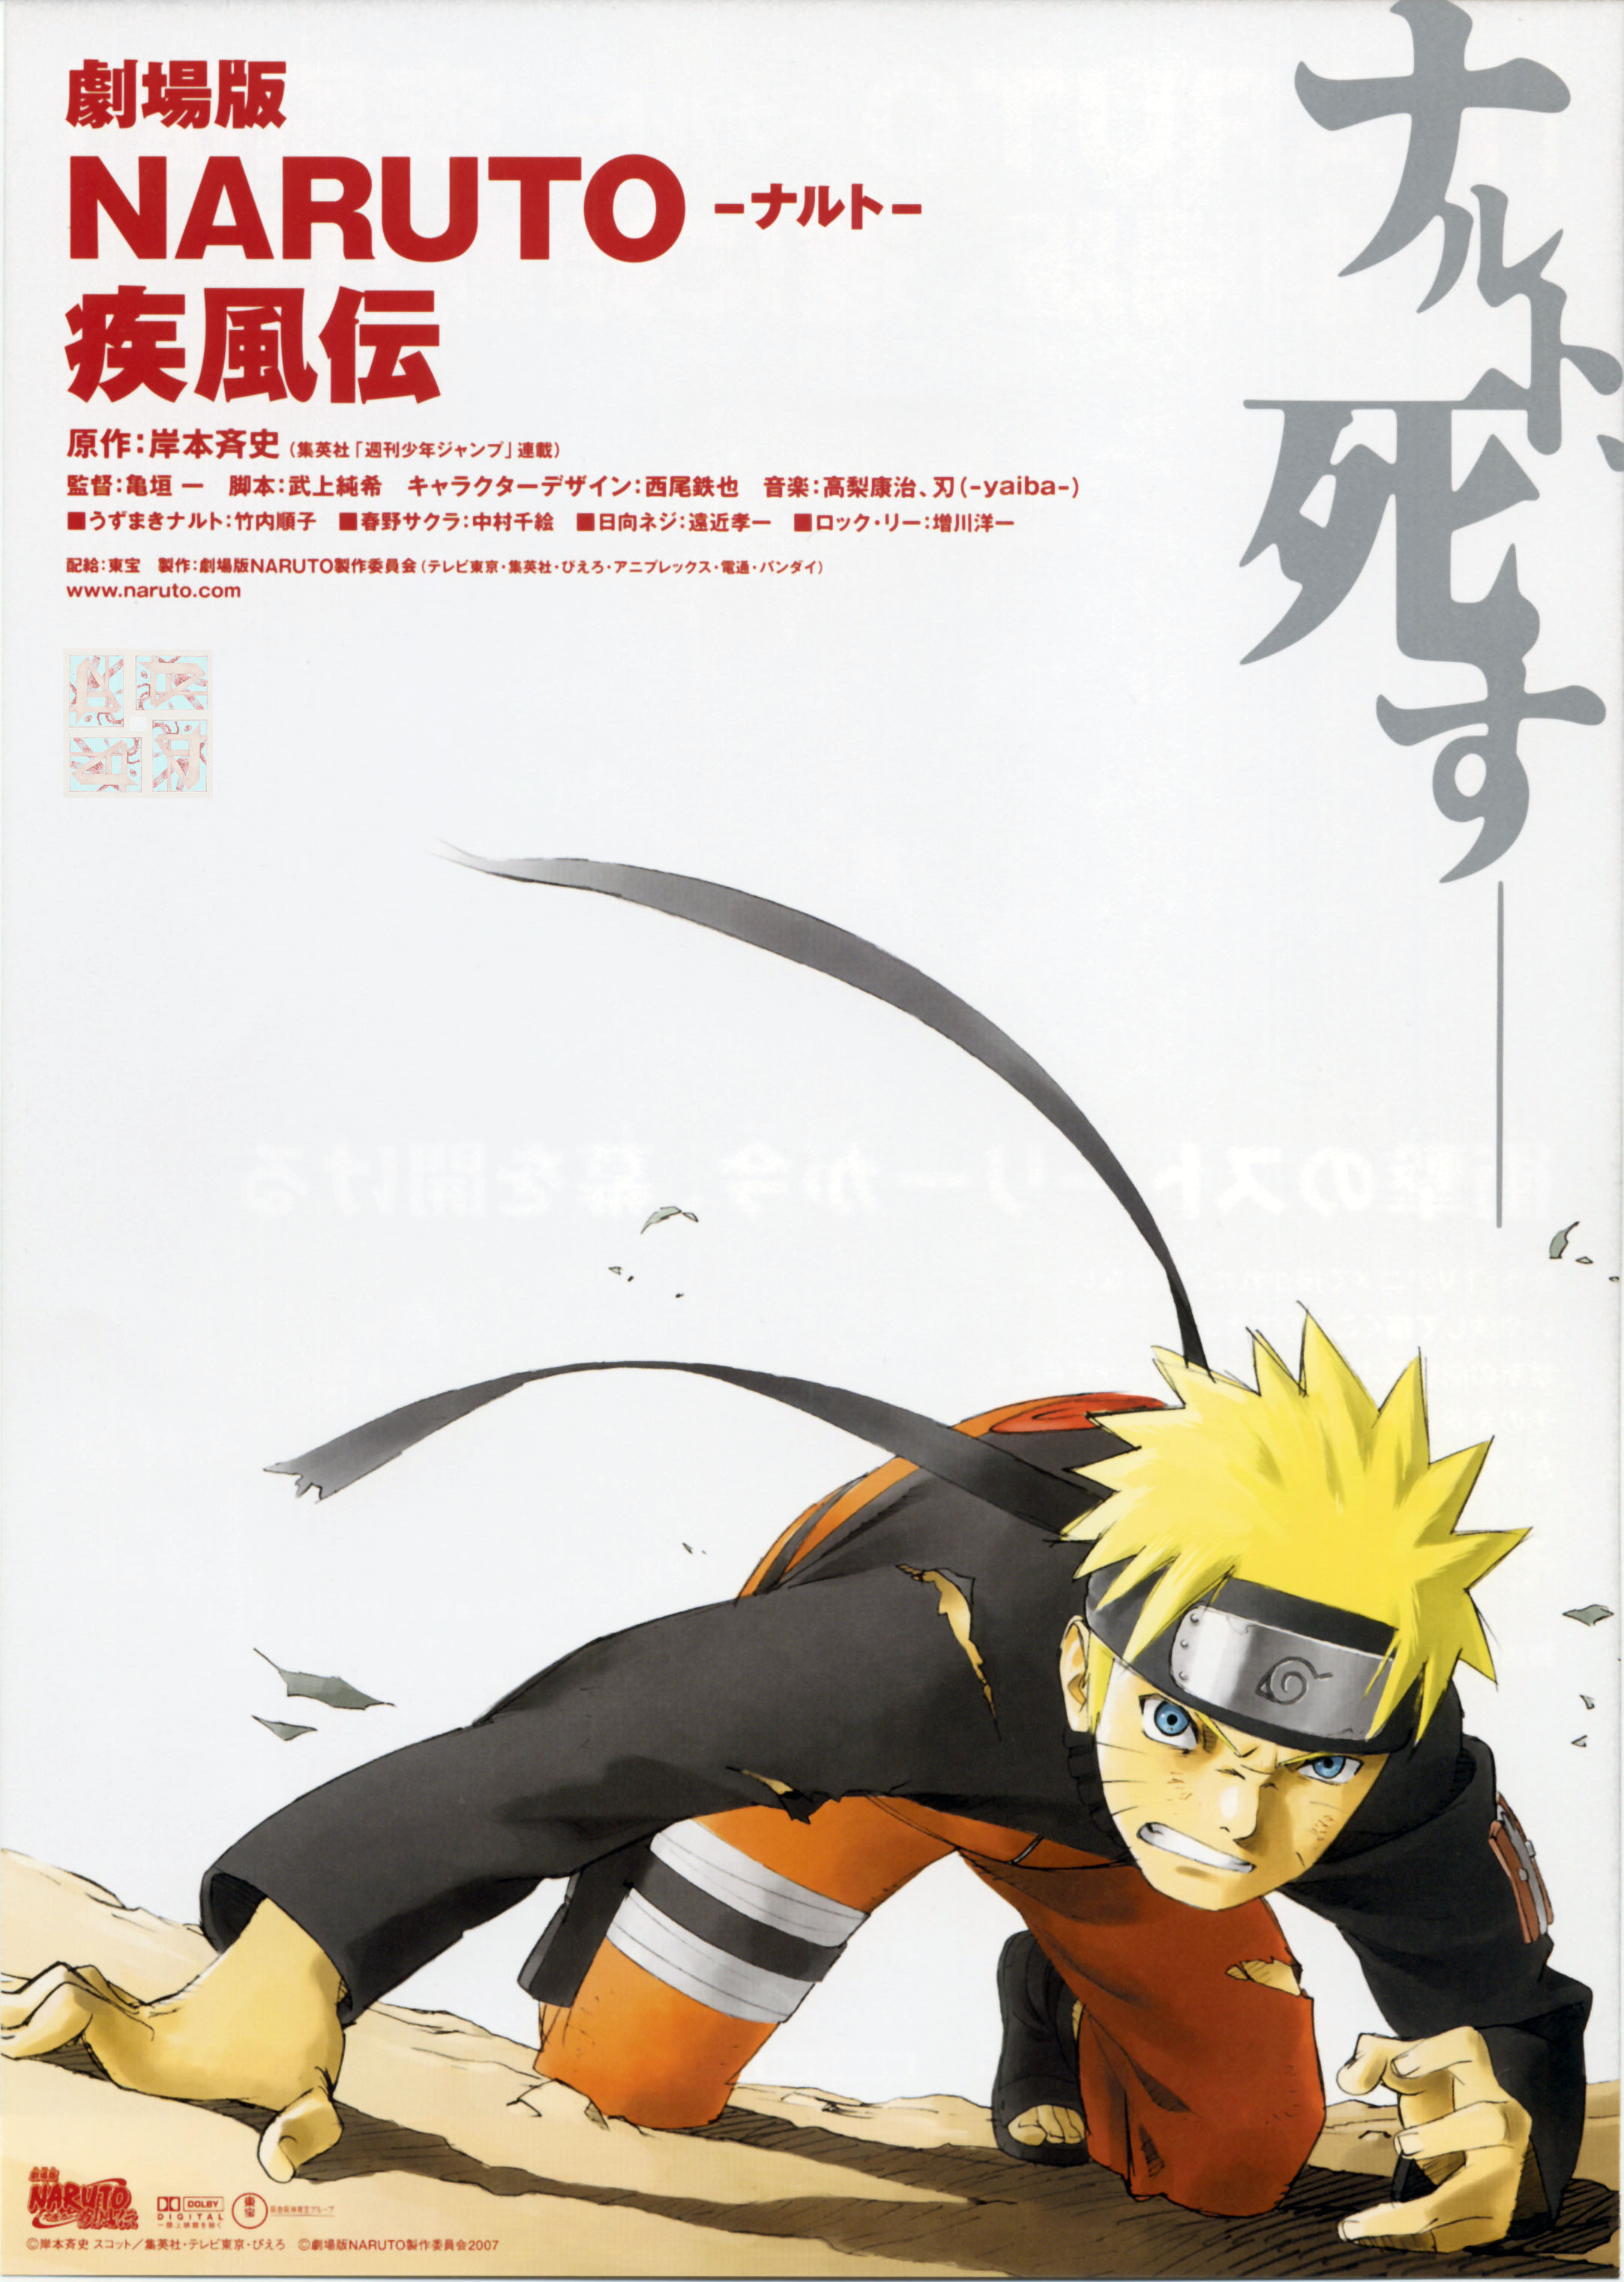 Boruto: Naruto The Movie' news: international release, plot spoilers